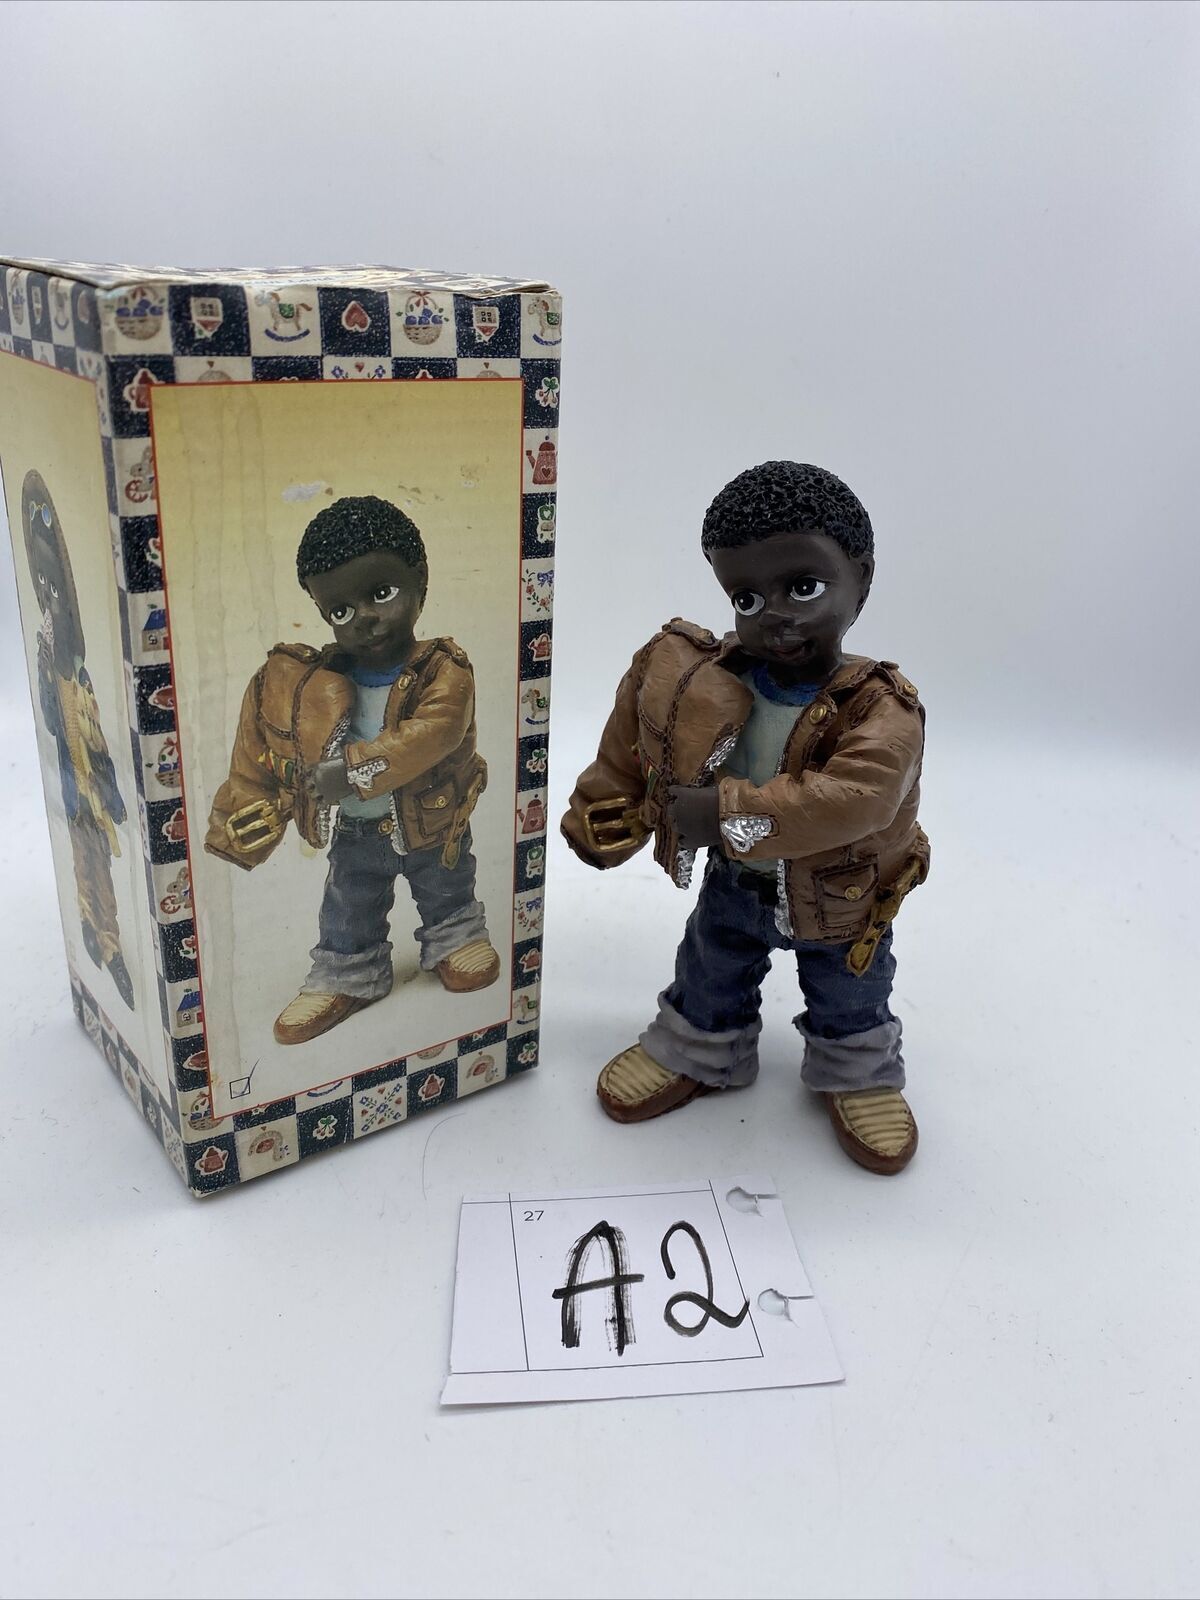 VTG Ceramic World Inc Poly Resin Land Figurine Fashion Boy Present For Christmas